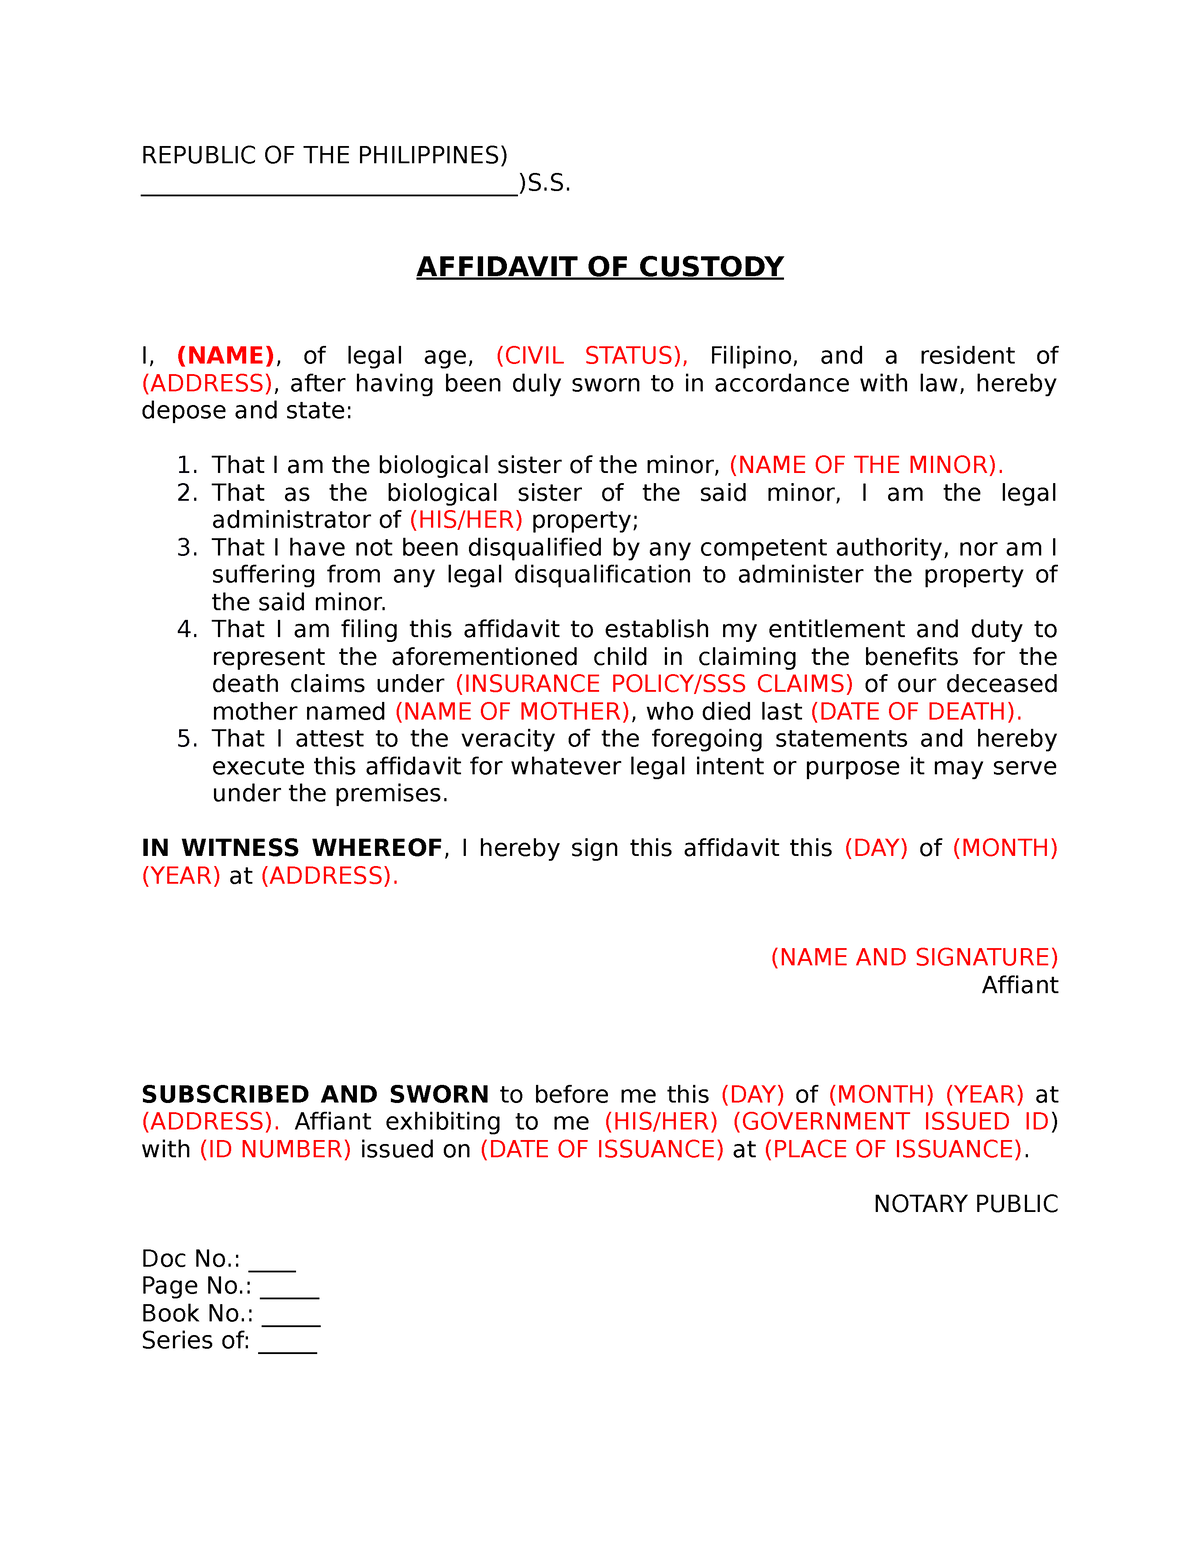 Affidavit Of Custody Sibling Republic Of The Philippines S 3925